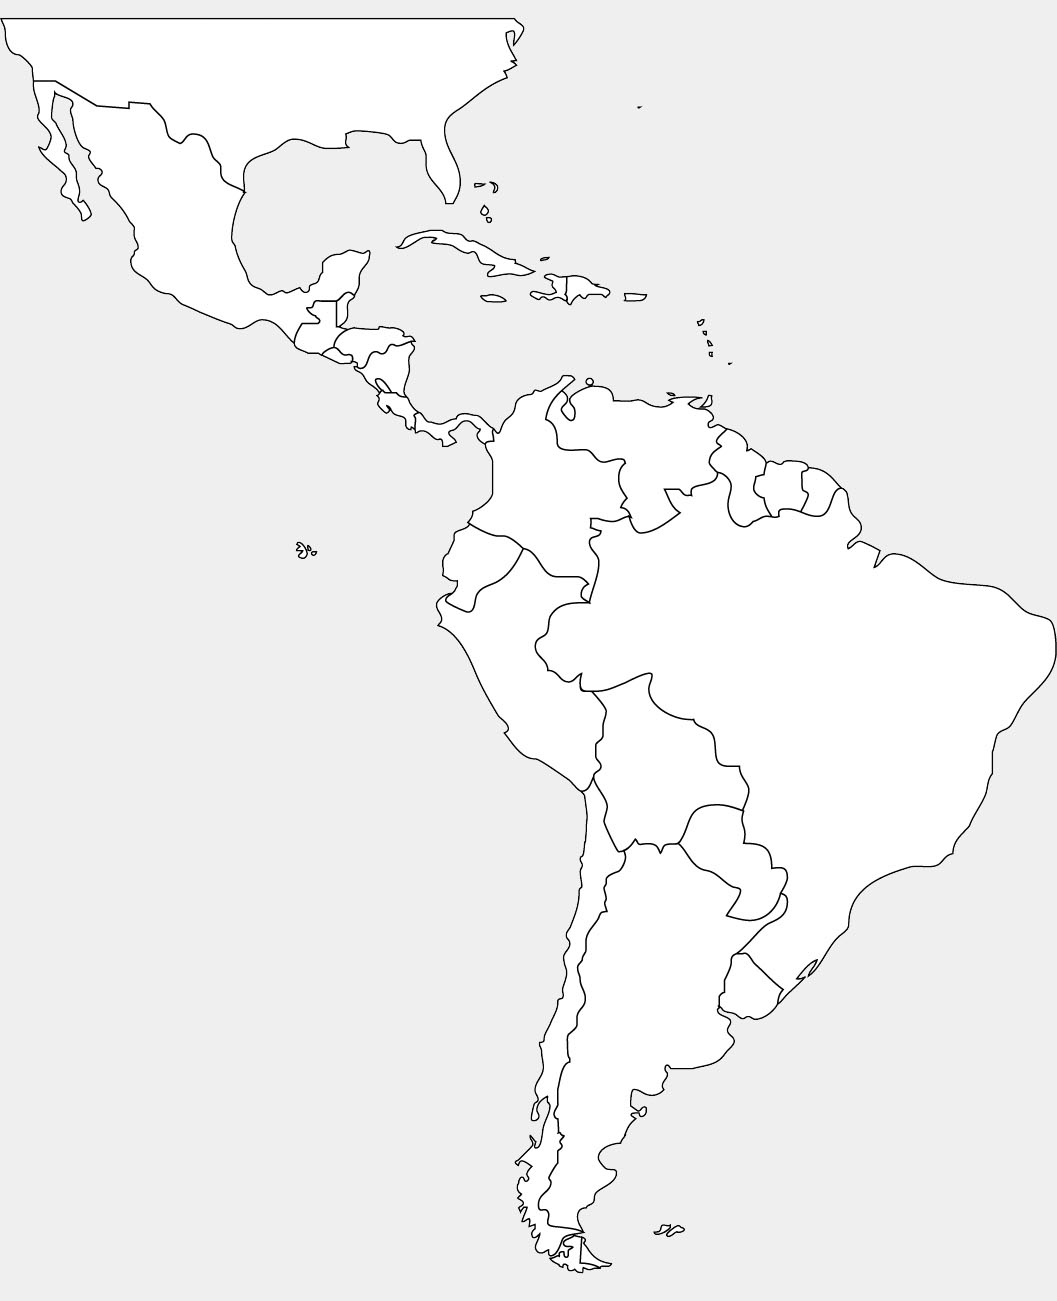 kino-verhandeln-katastrophe-blank-map-of-western-hemisphere-im-ausland